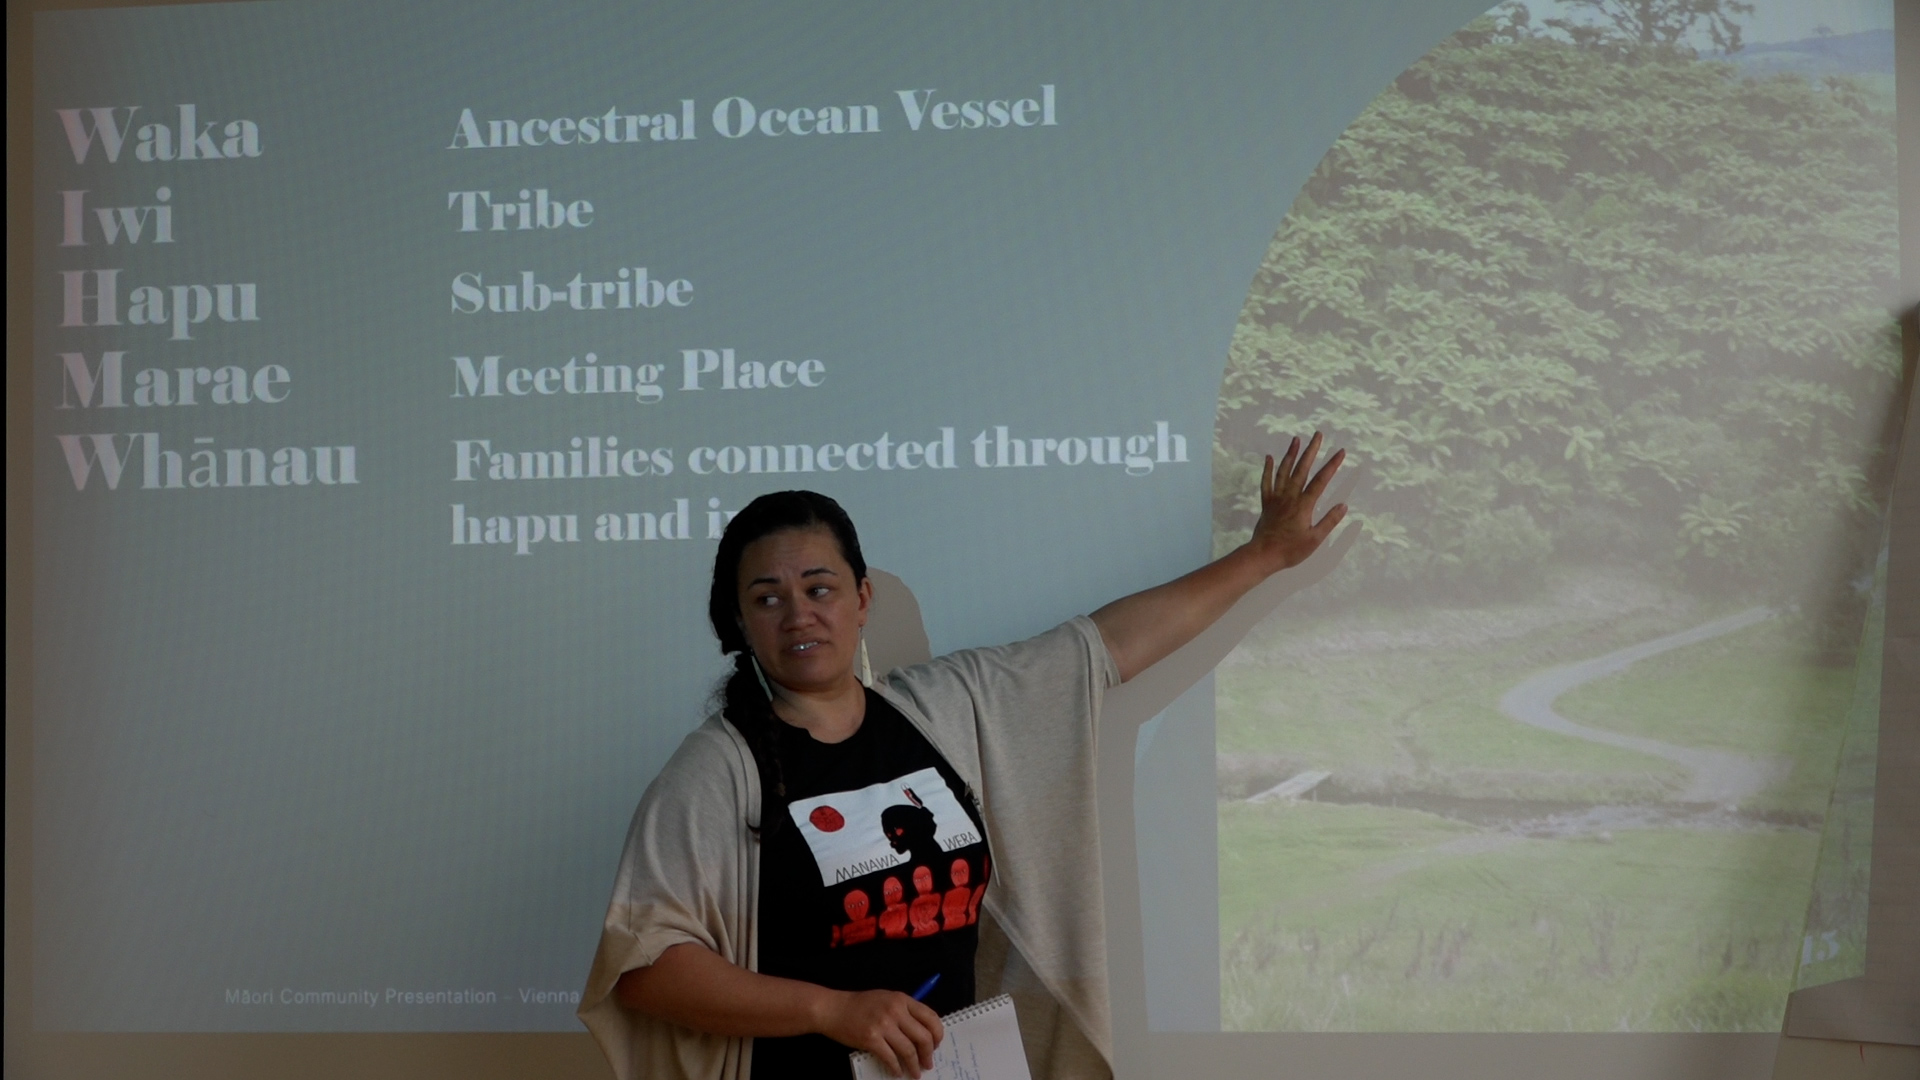 Dr. Cadence Kaumoana presenting about Maori community